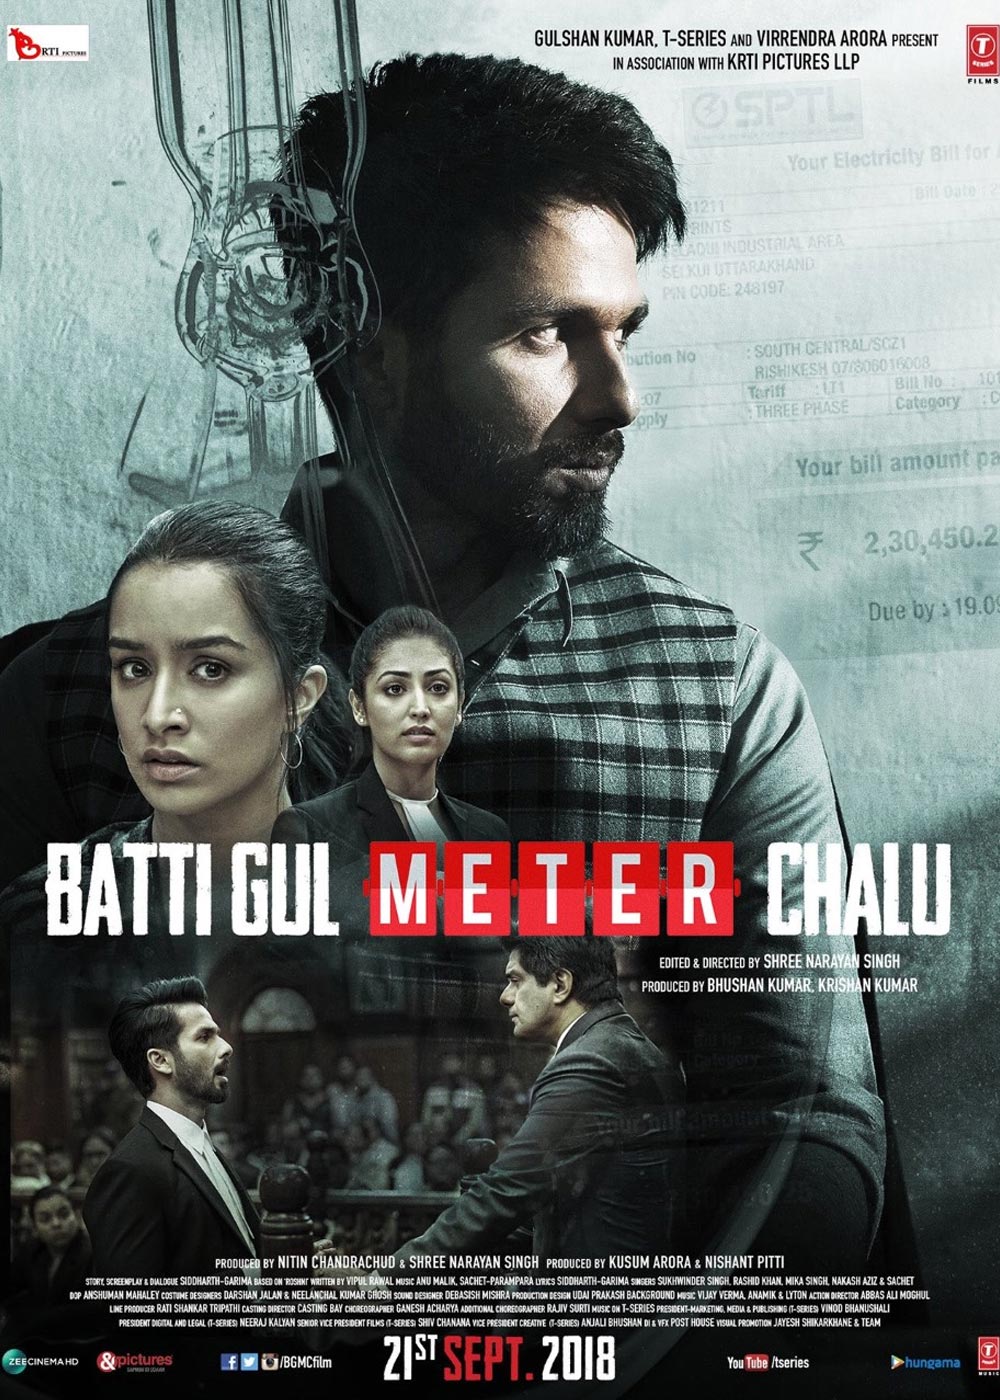 Batti Gul Meter Chalu Movie Release Date, Cast, Trailer, Songs, Review